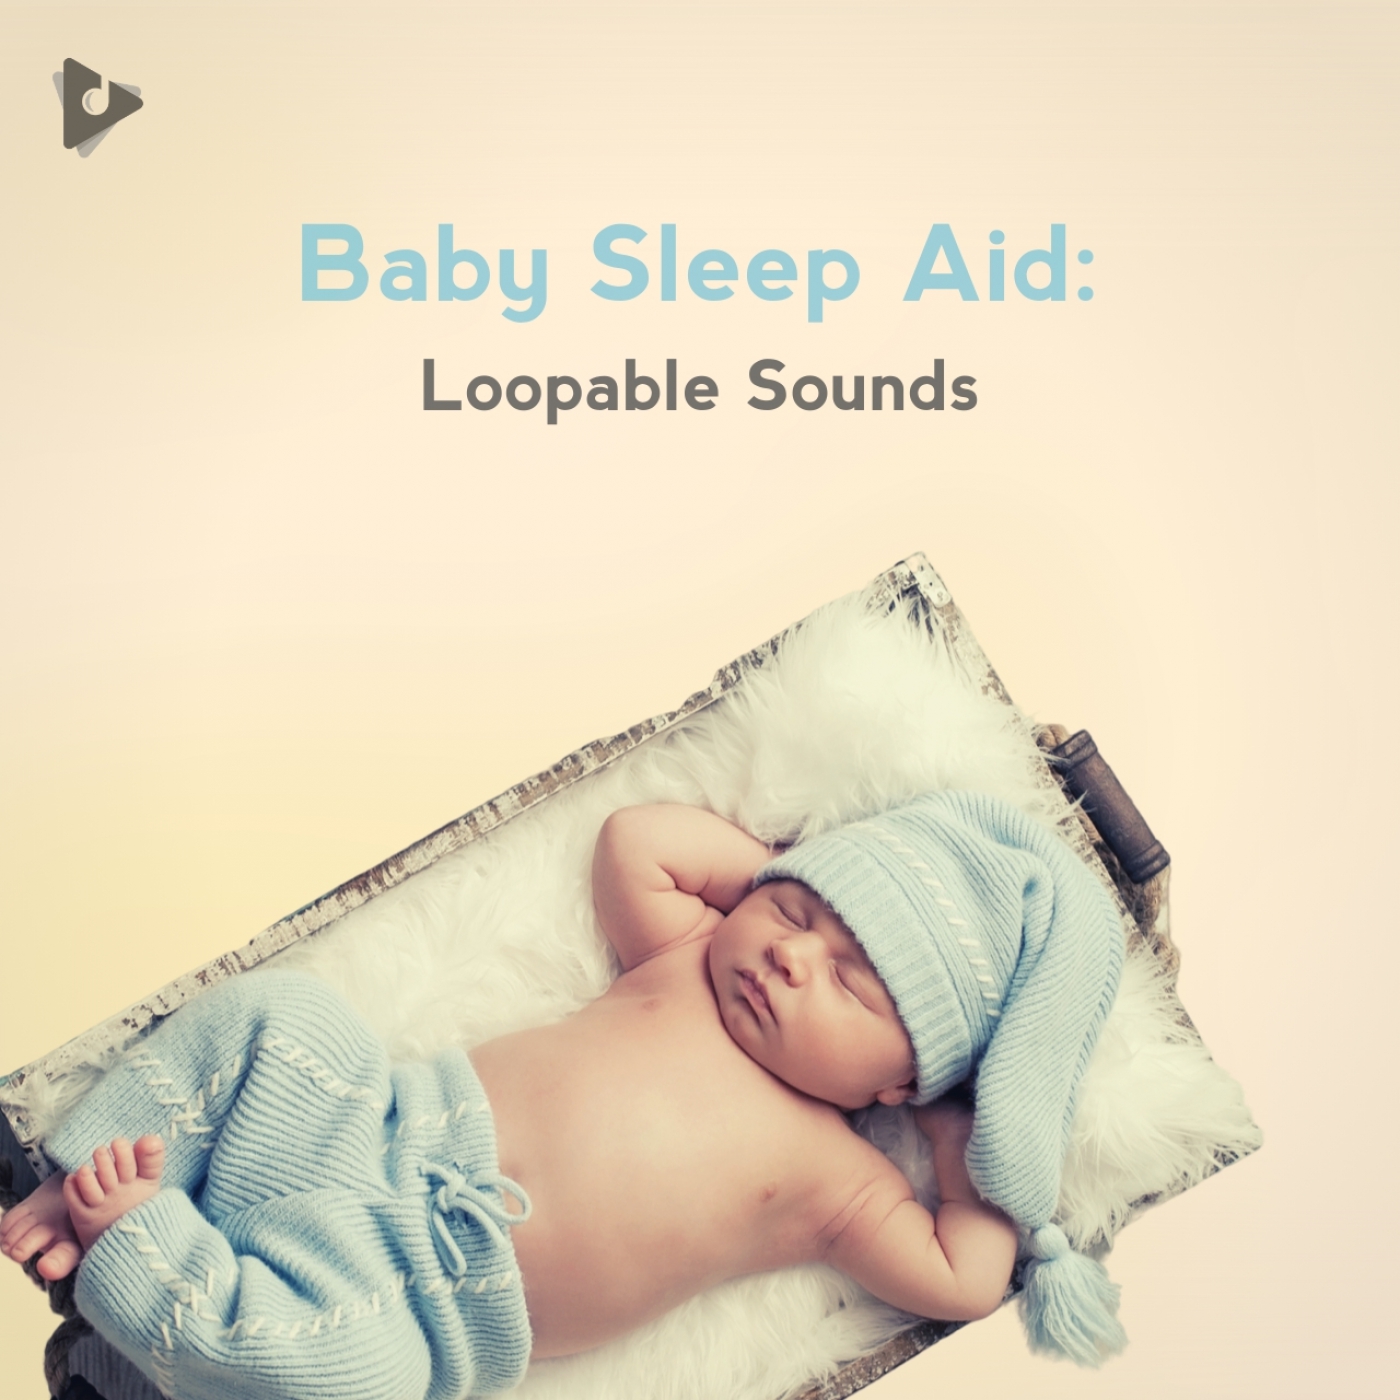 Baby Sleep Aid: Loopable Sounds